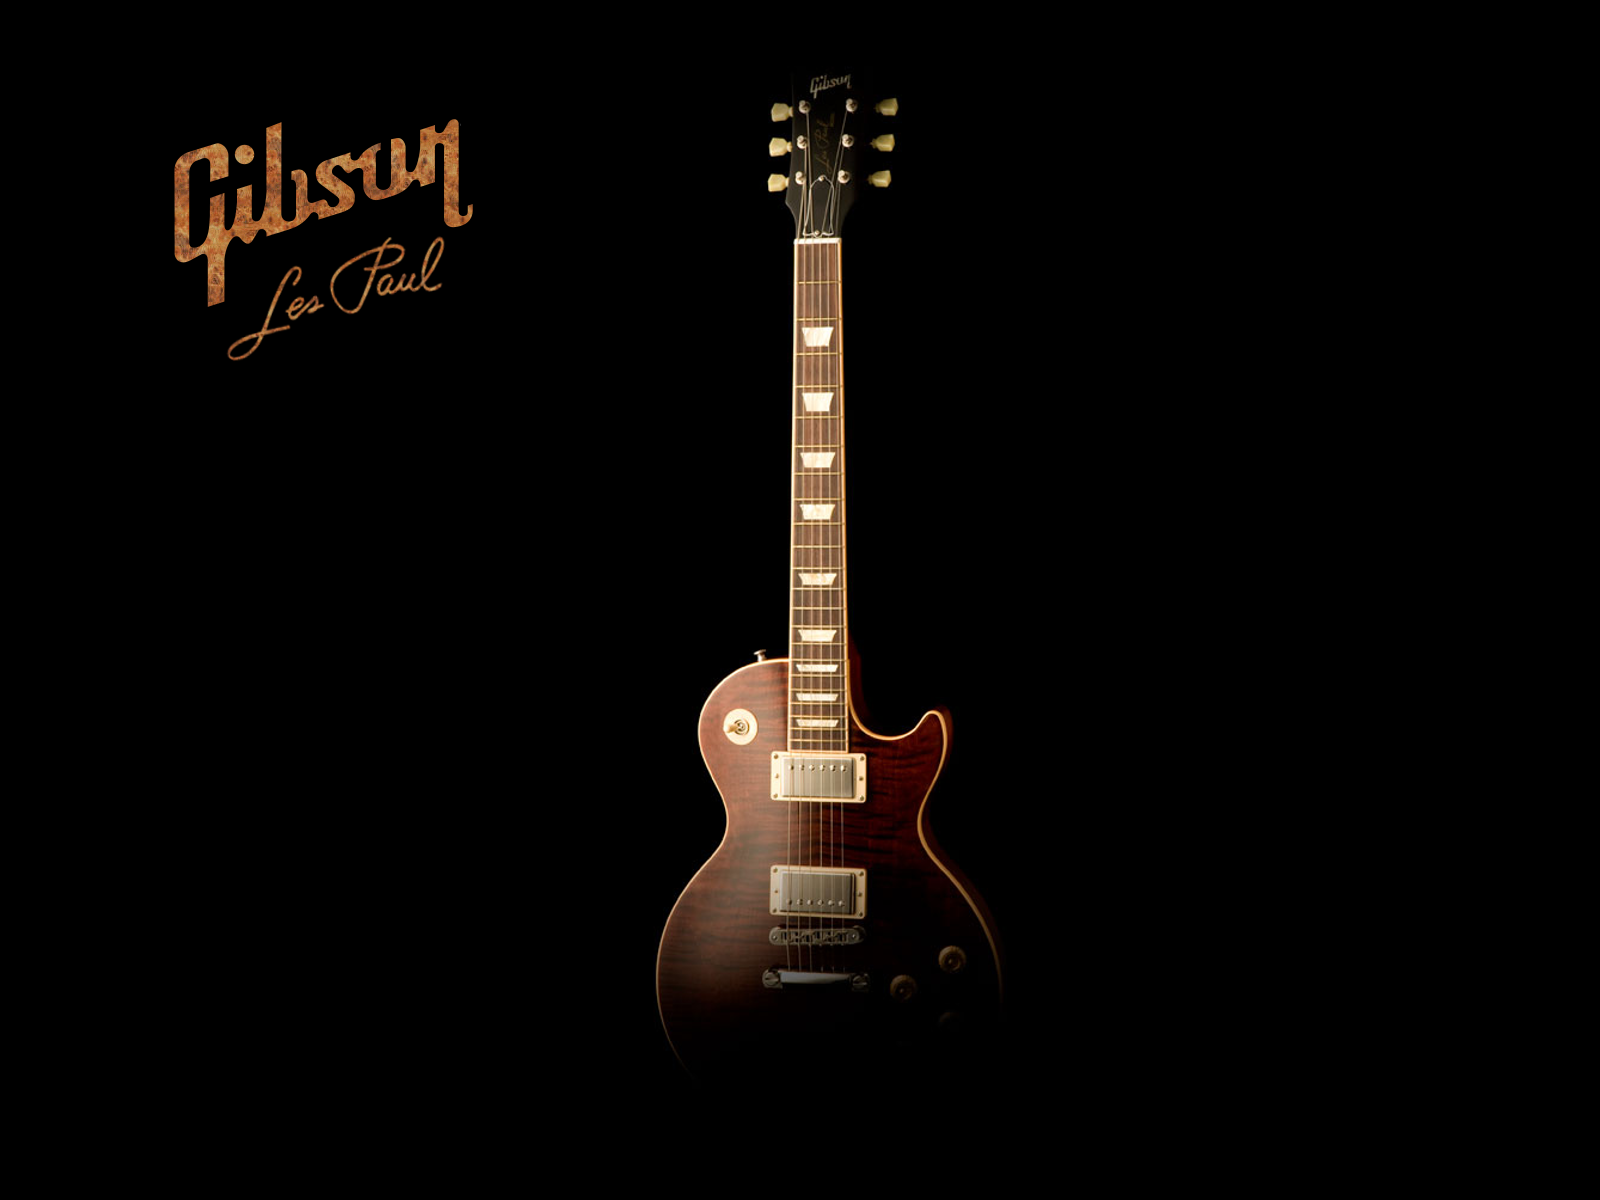 Free download Gibson Guitar Wallpaper 819457 Gibson Guitar